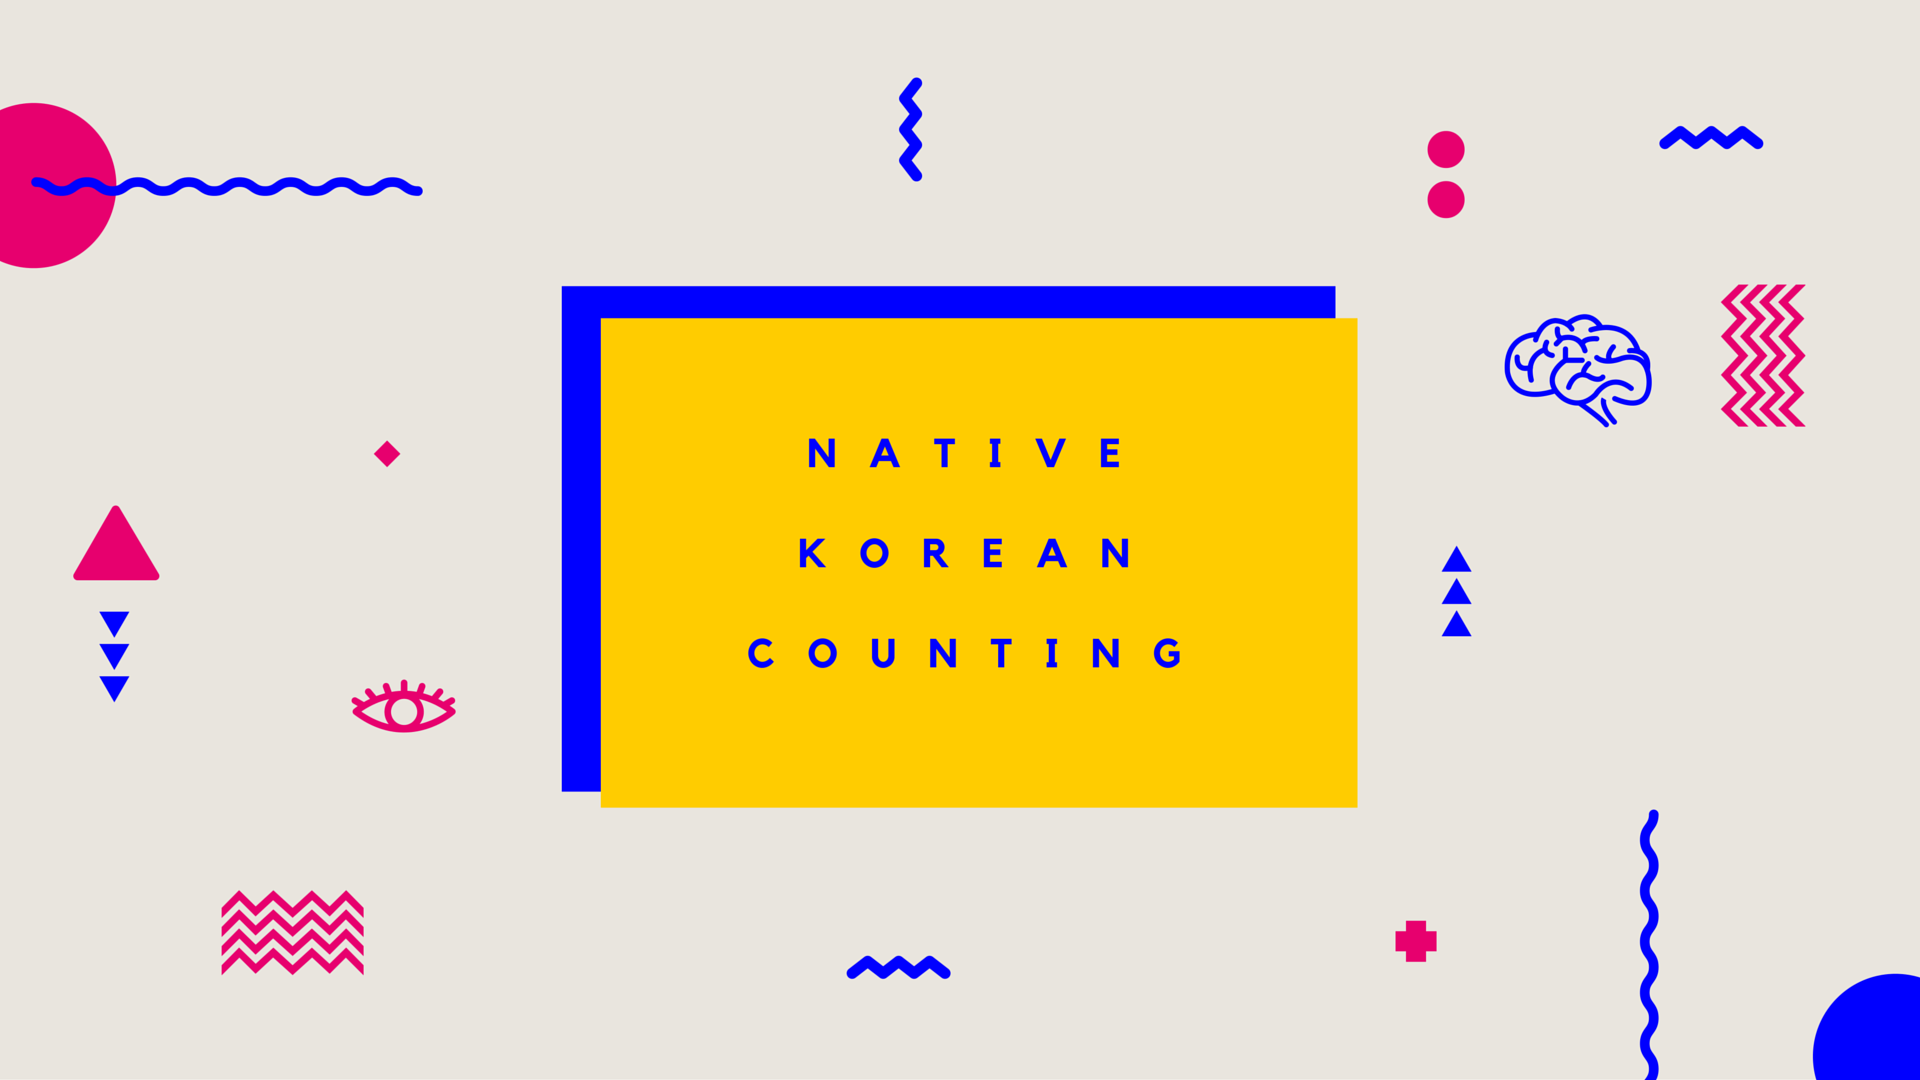 Counting in Korean - Native Korean Counting